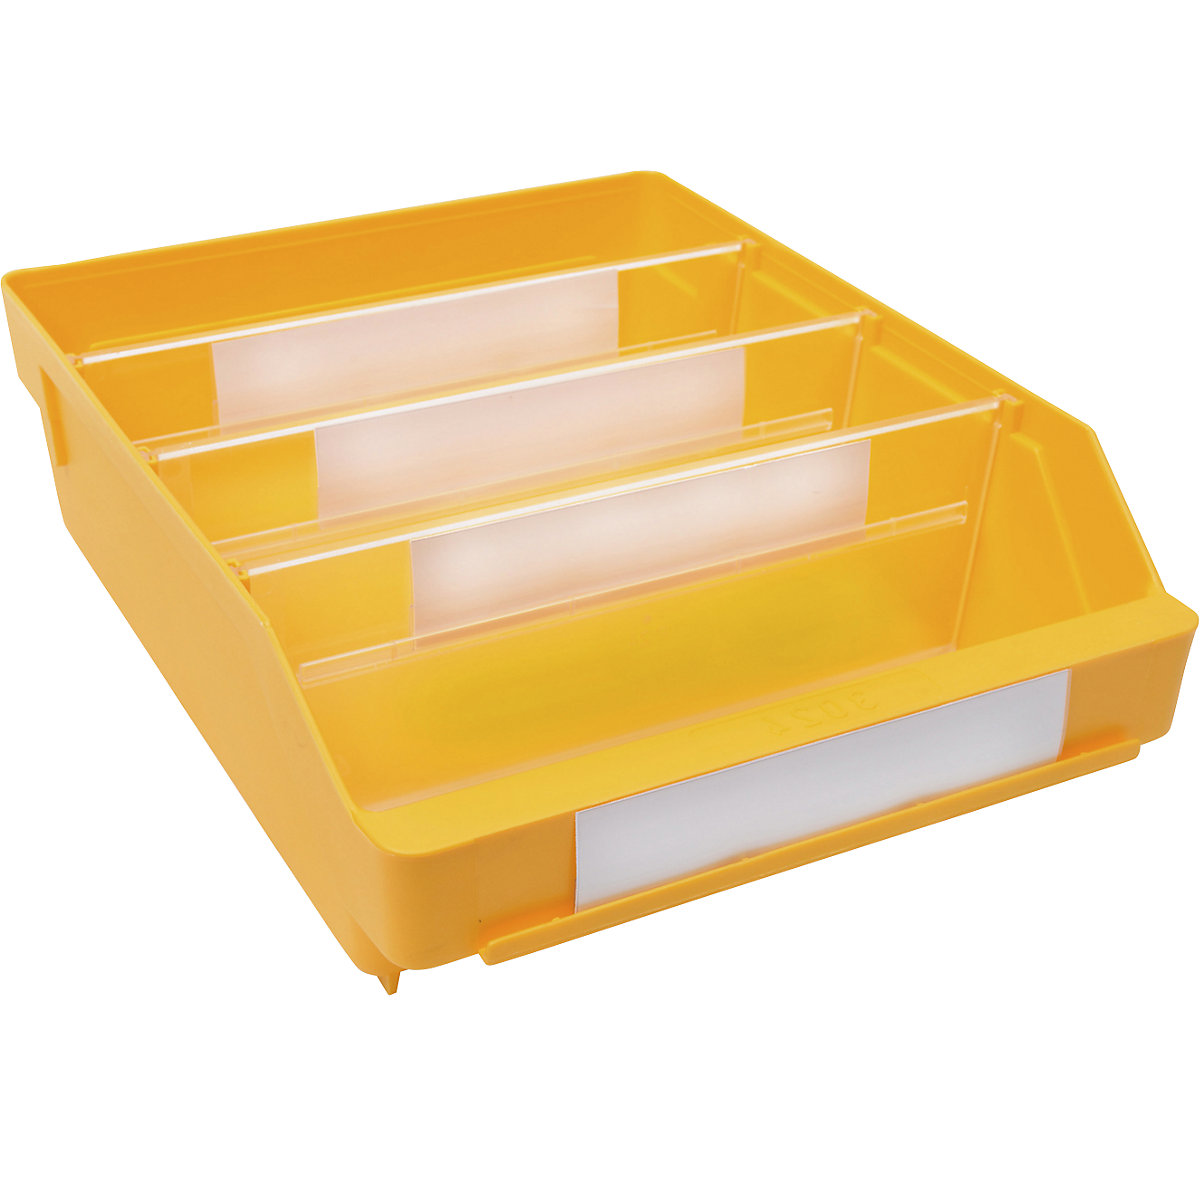 Shelf bin made of highly impact resistant polypropylene – STEMO